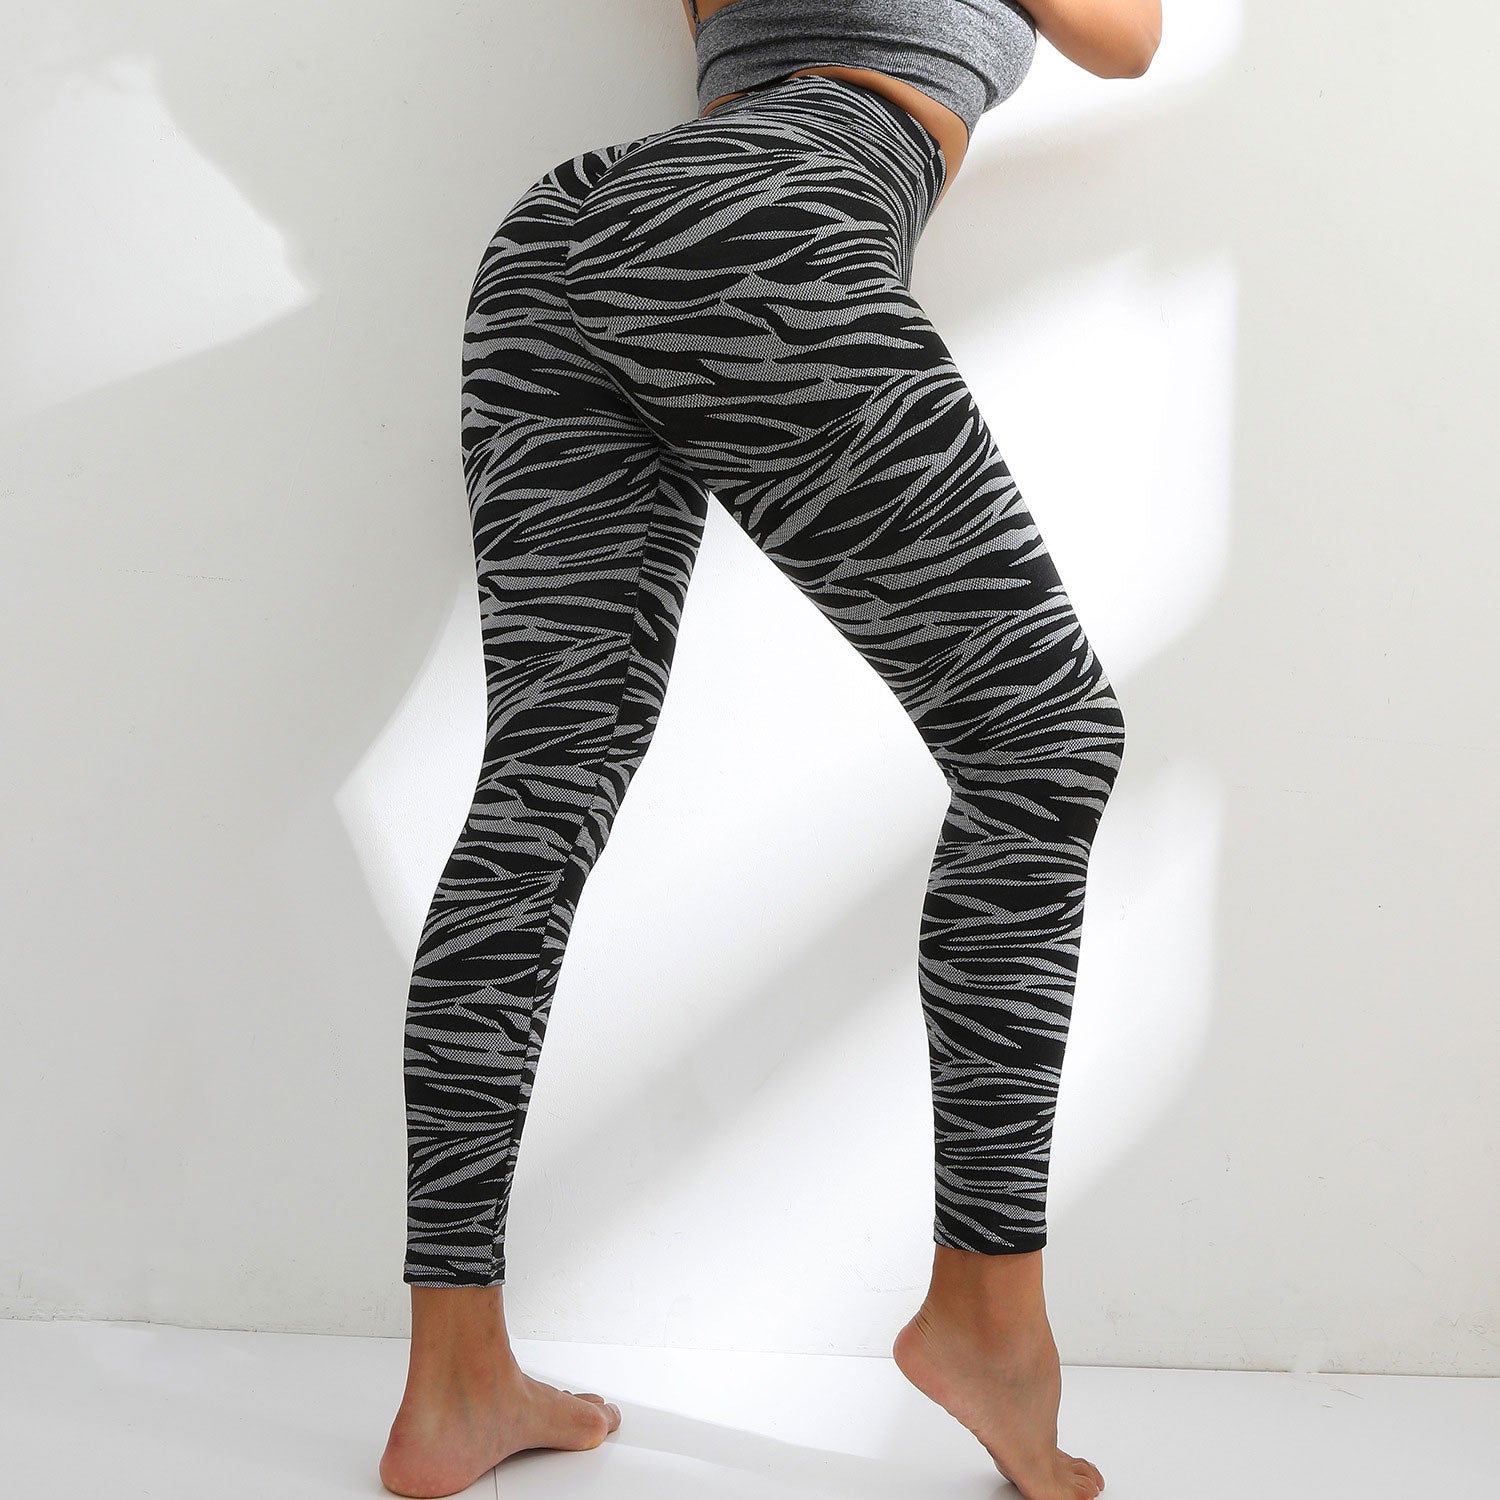 Mojoyce Leopard Yoga Leggings Women Seamless Gym Yoga Pants High Waist Sports Legging Push Up Workout Fitness Running Pants